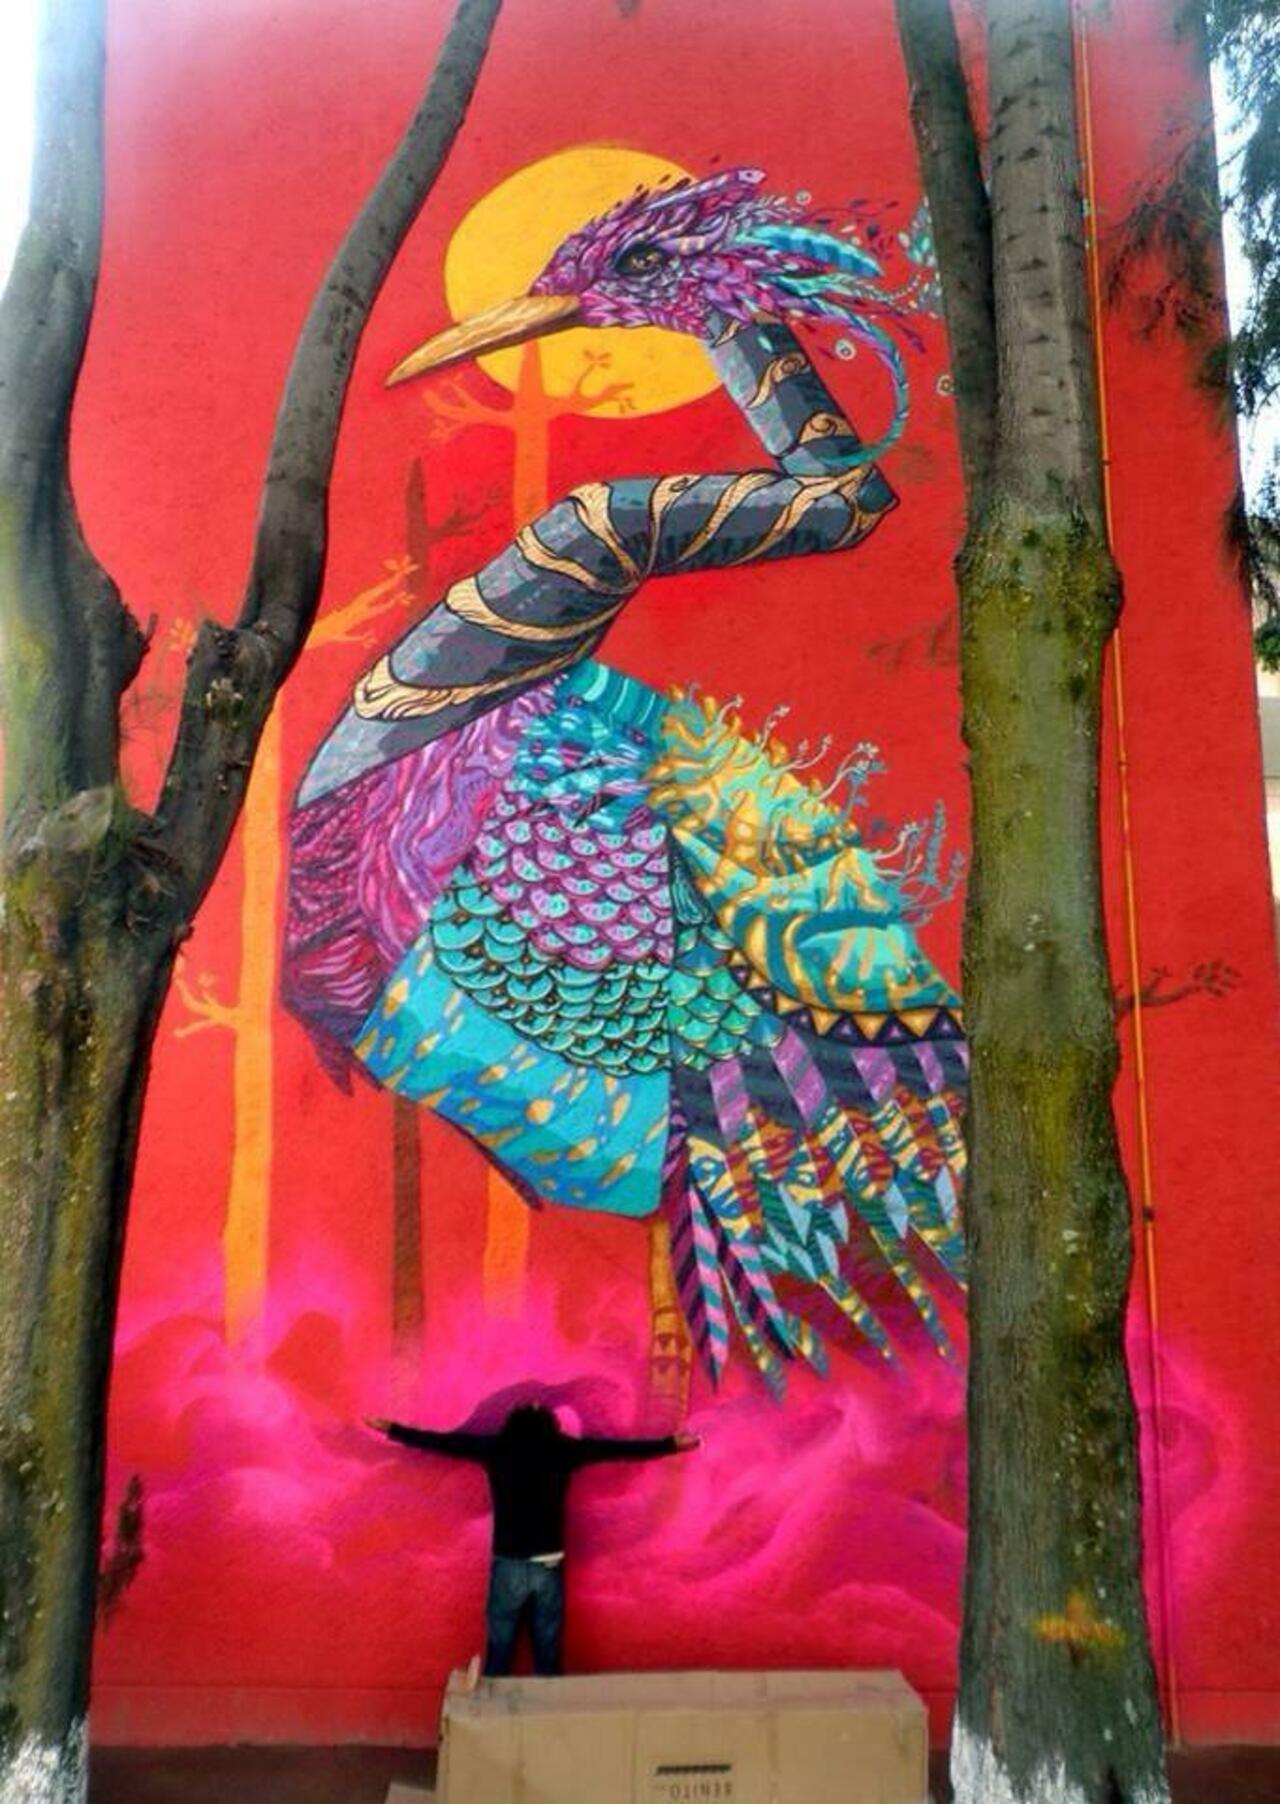 'Songs of Colour'

Sublime Nature in Street Art by NacHo Wm ft. Farid Rueda 

#art #arte #graffiti #streetart http://t.co/D1BBNBAXcK